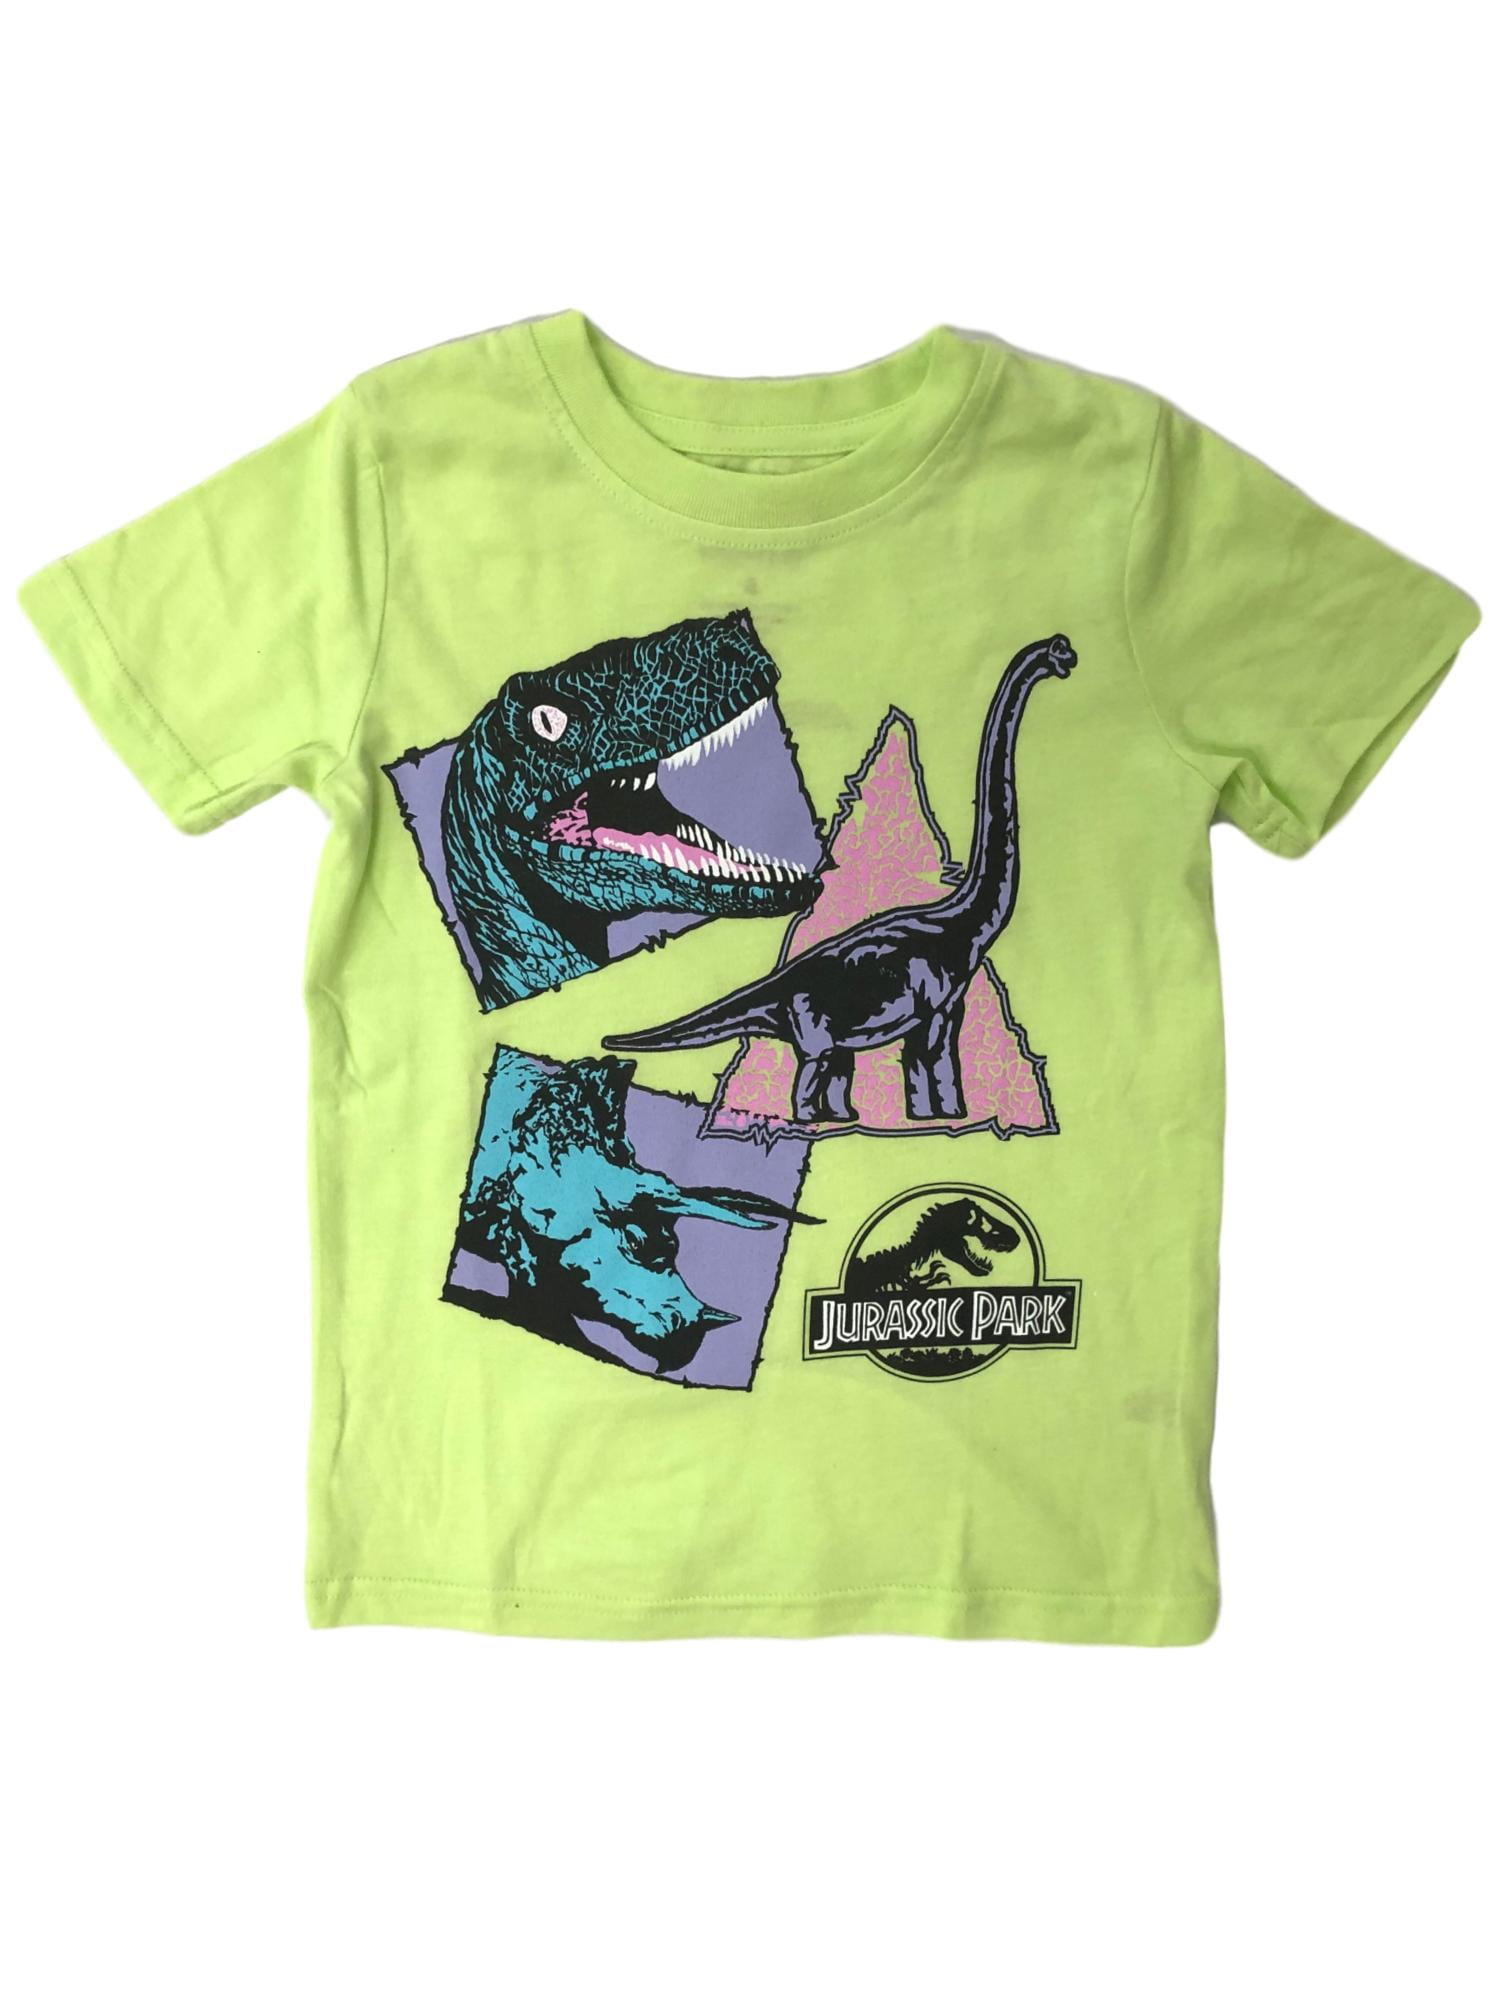 Jurassic Park Boys Neon 4 Green Short T-Shirt Shirt Dinosaur Tee Sleeve